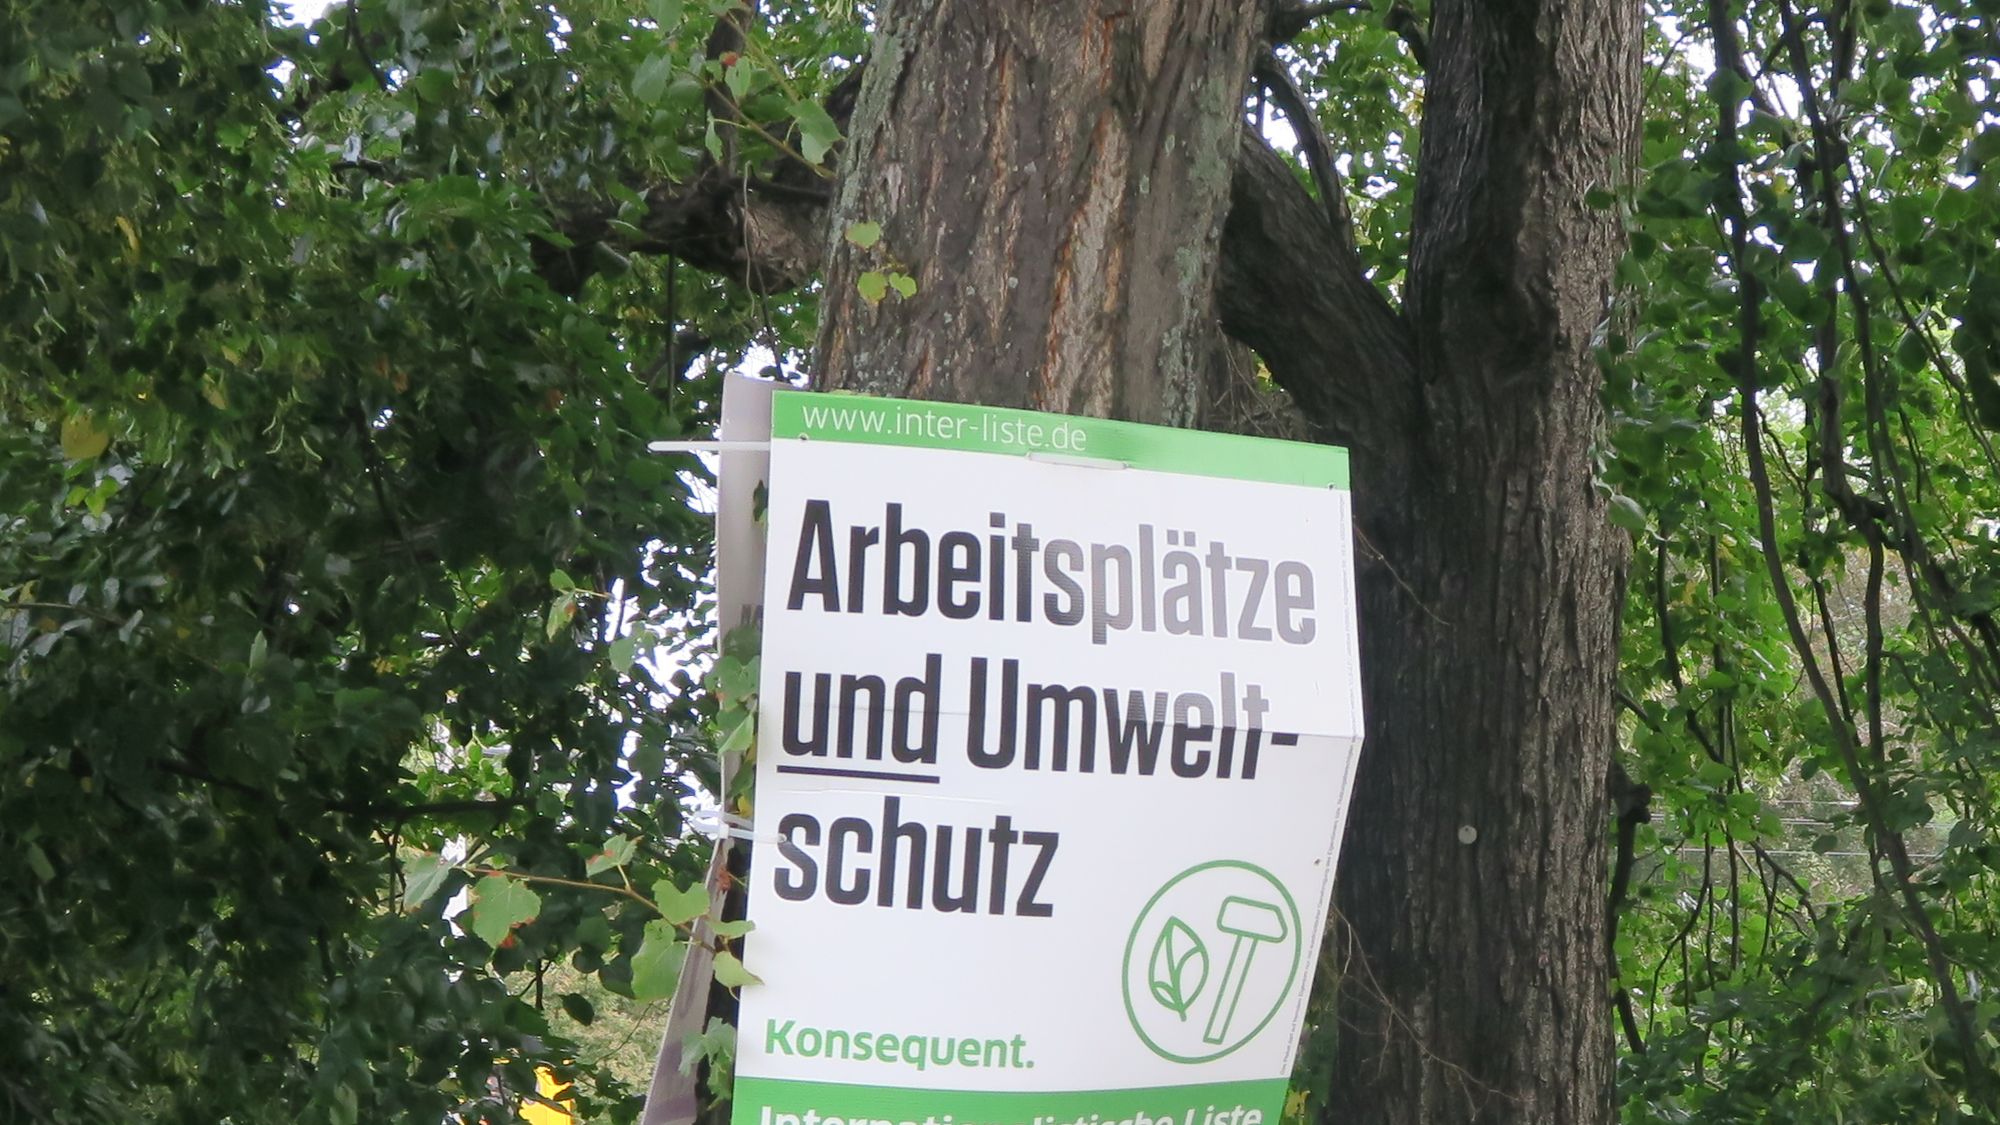 Plaste-Plakat am Baum am Albertplatz